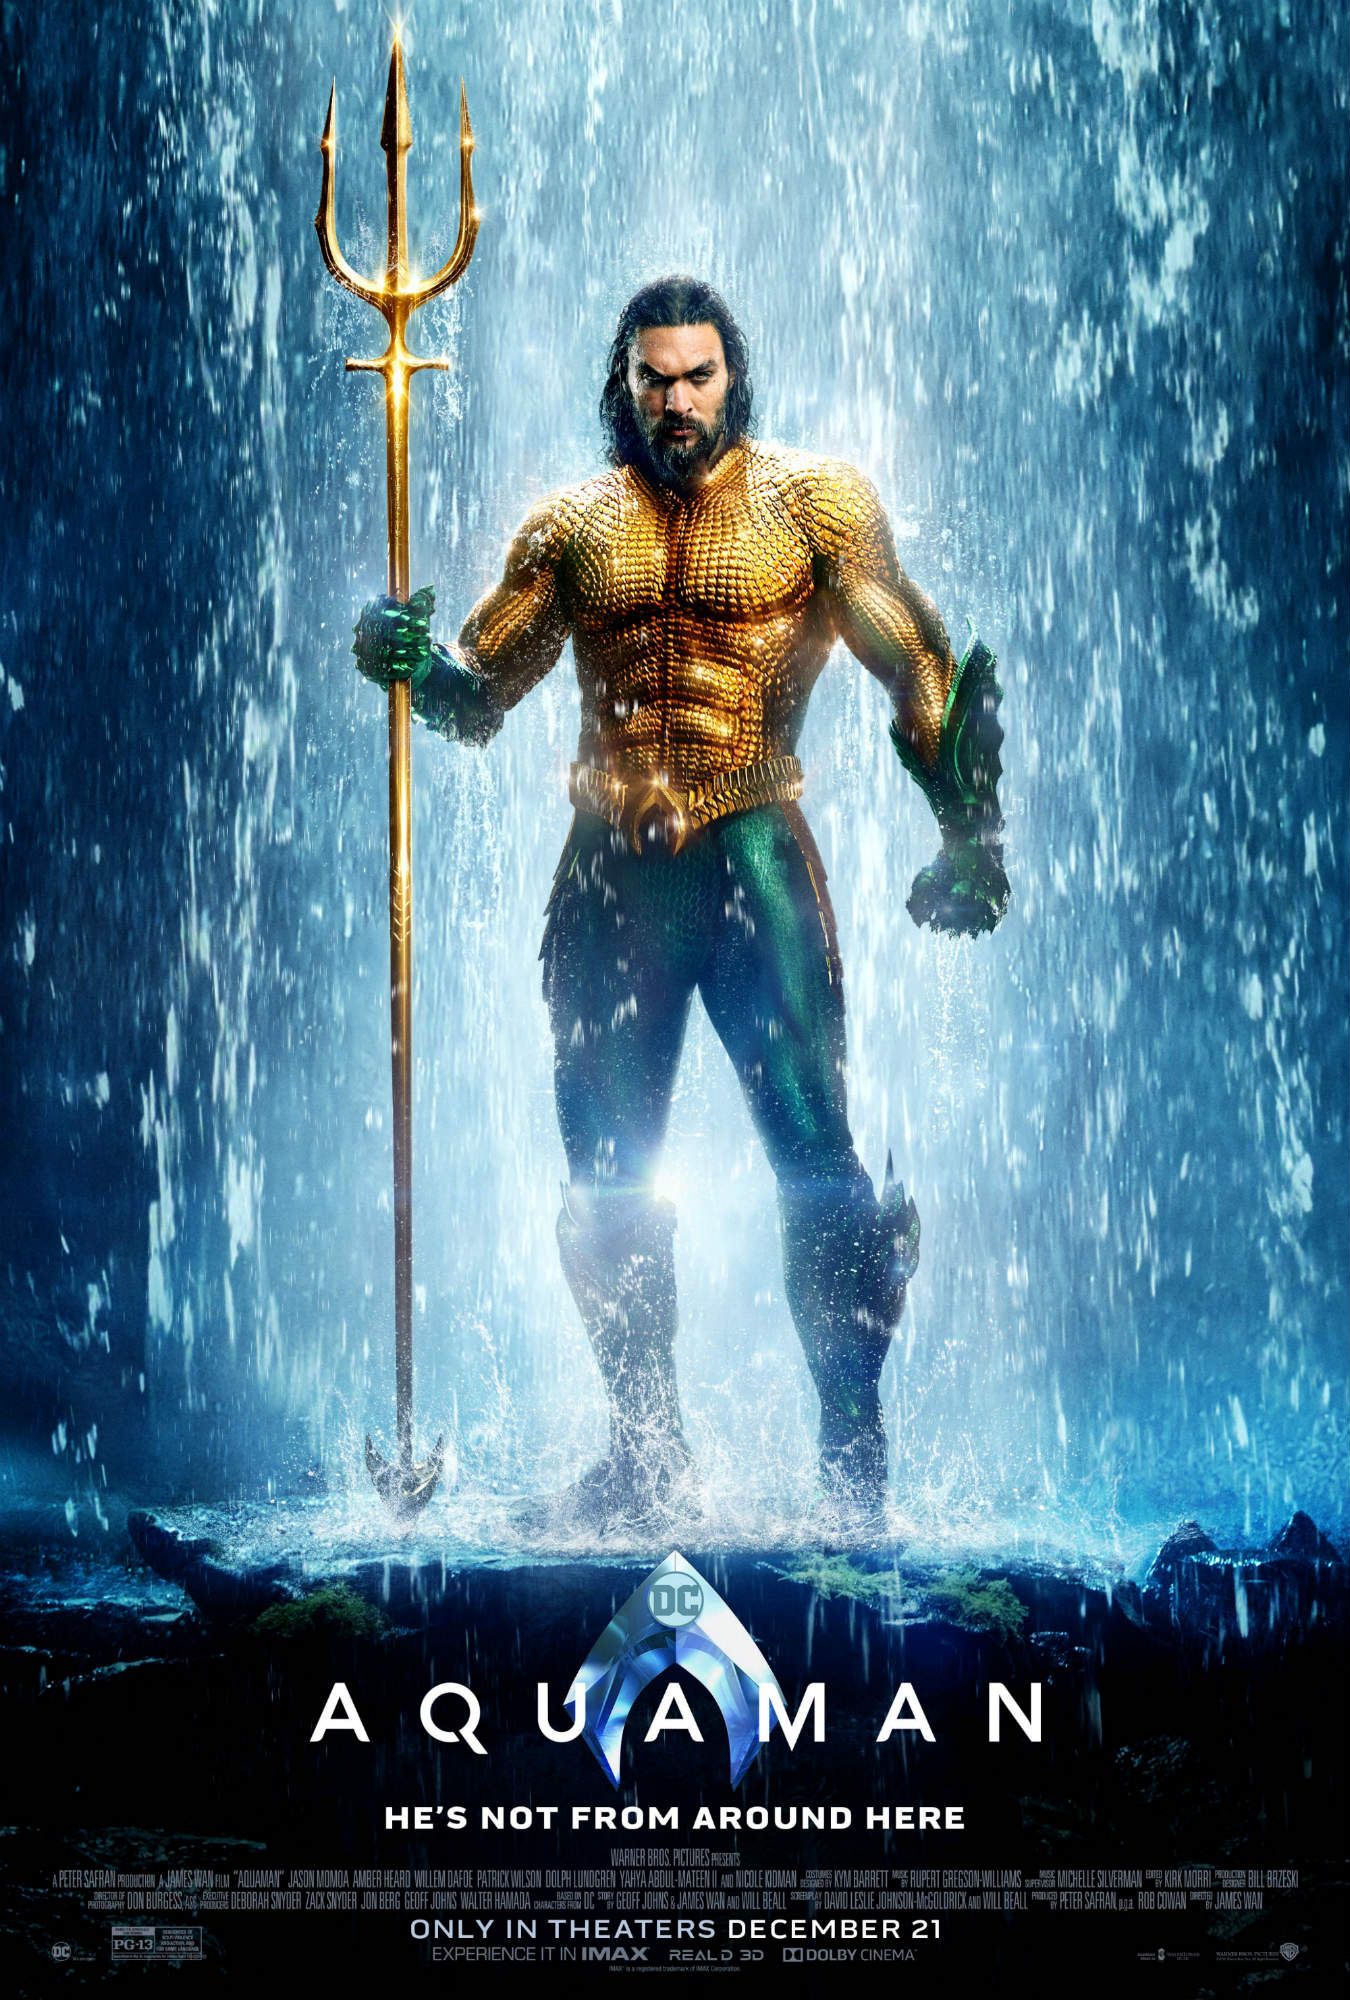 Aquaman Director James Wan Confirms Randall Park as Cast Member